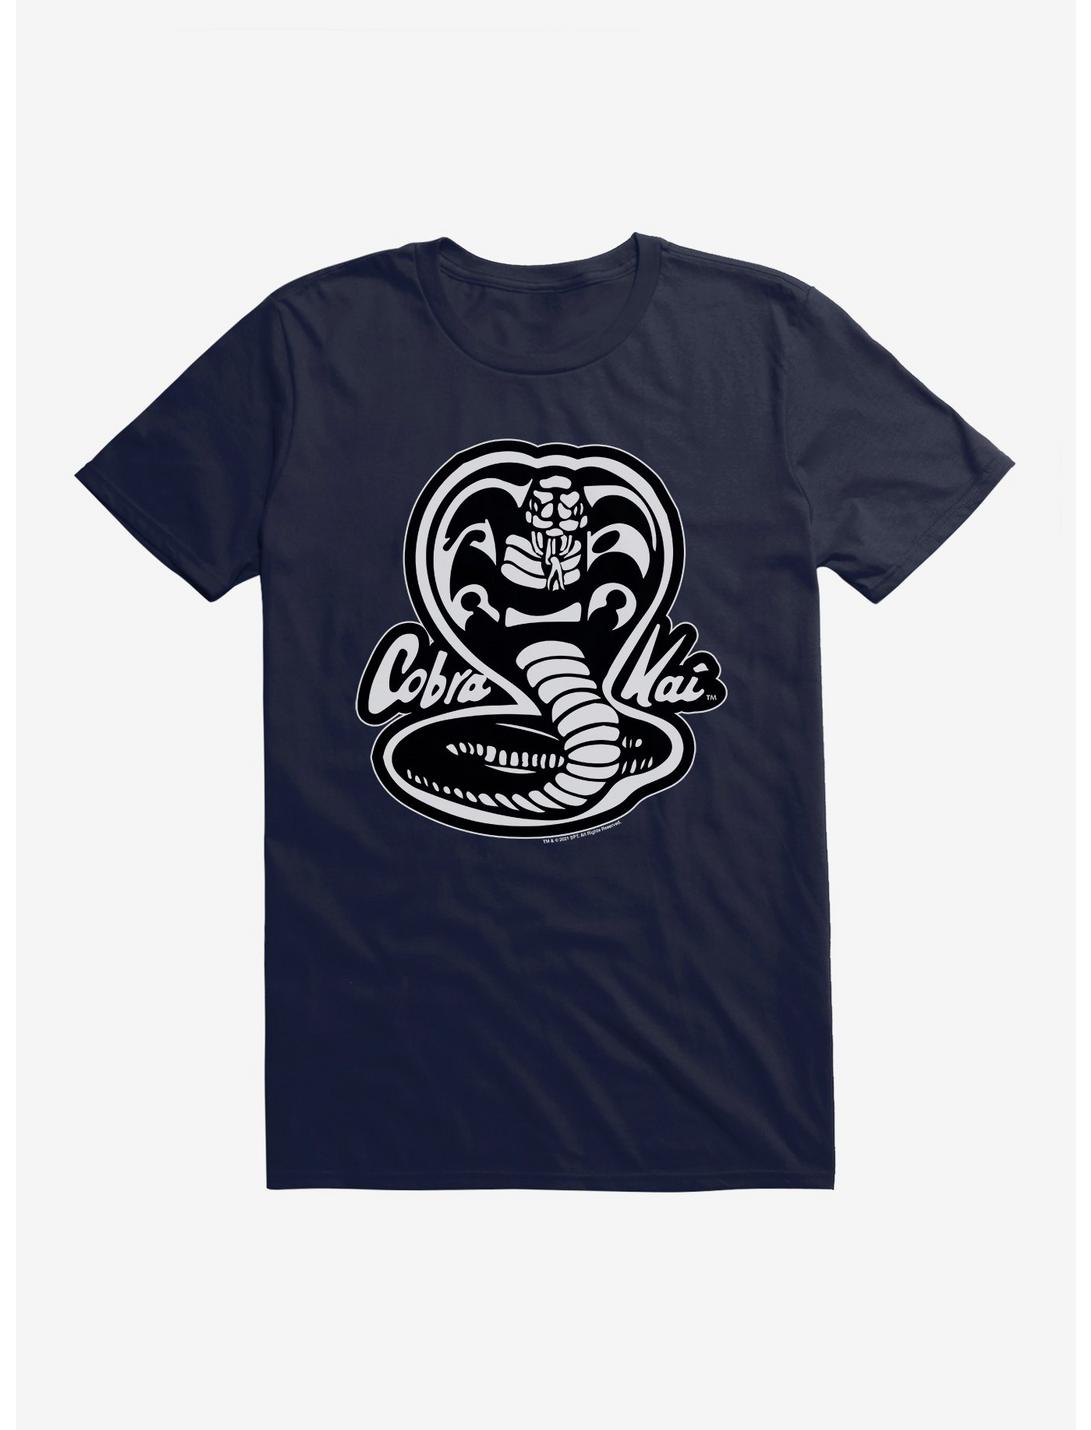 Cobra Kai Black And White Logo T-Shirt, NAVY, hi-res